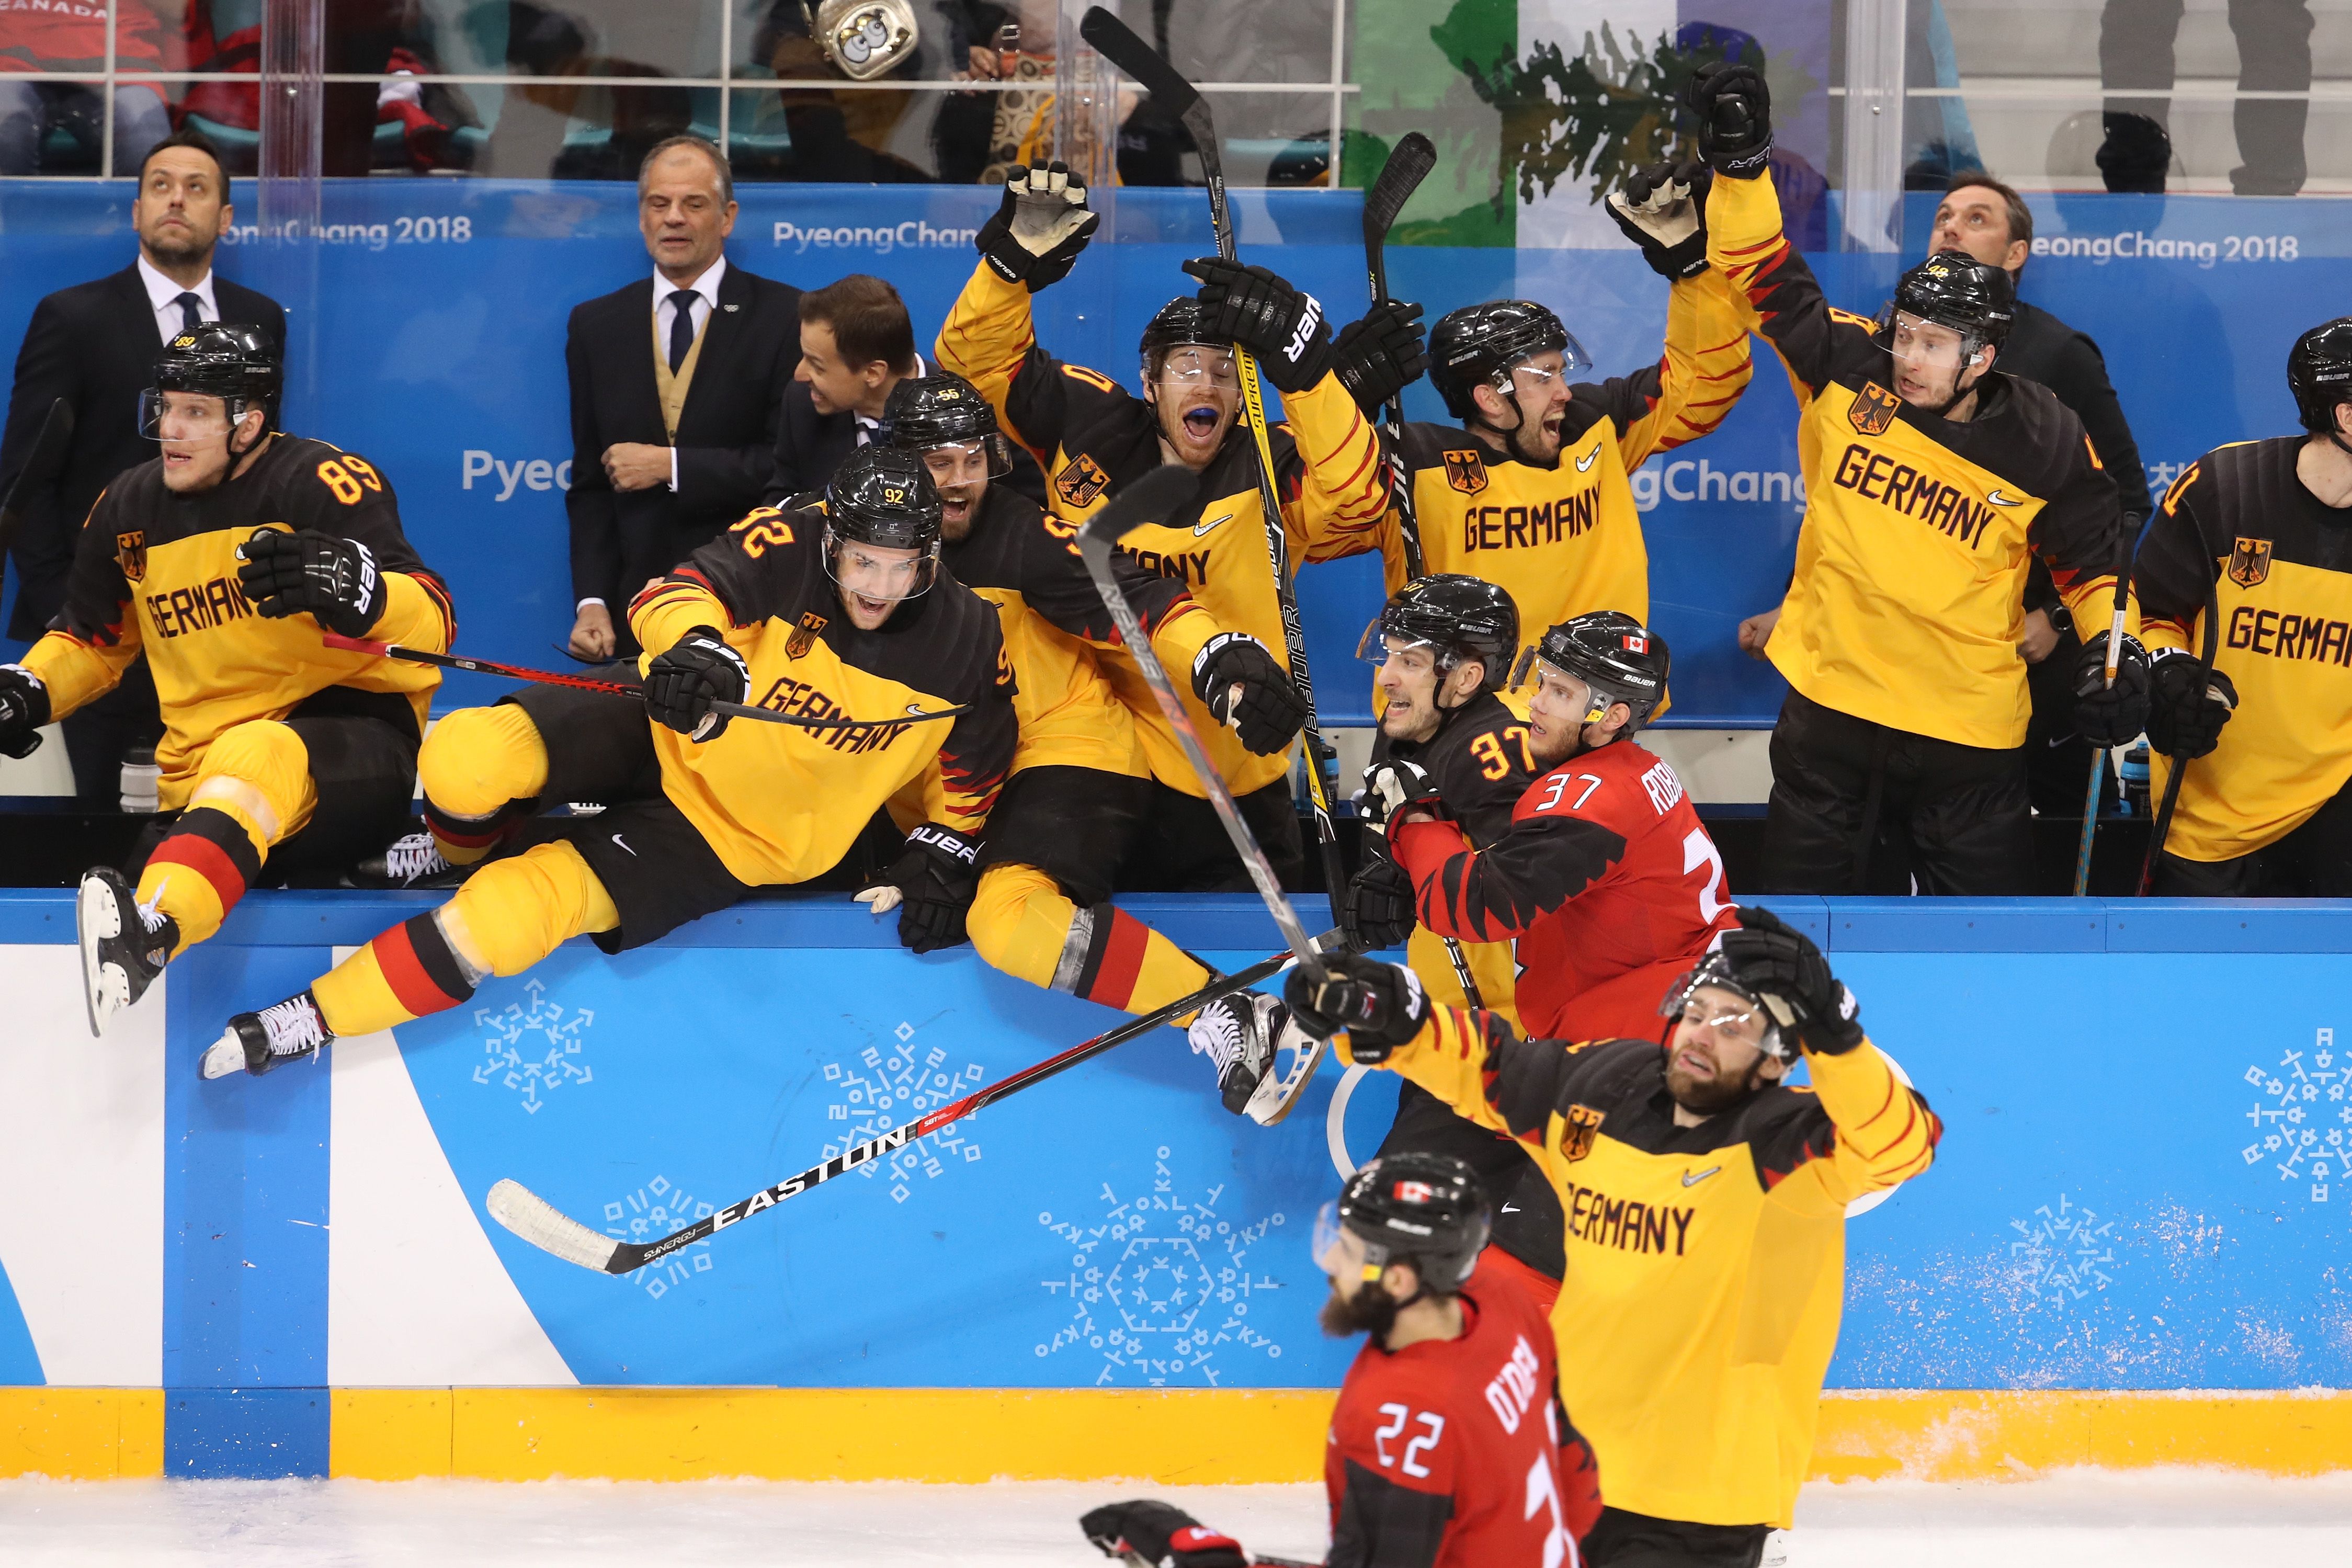 37 photos: Women's Olympic ice hockey